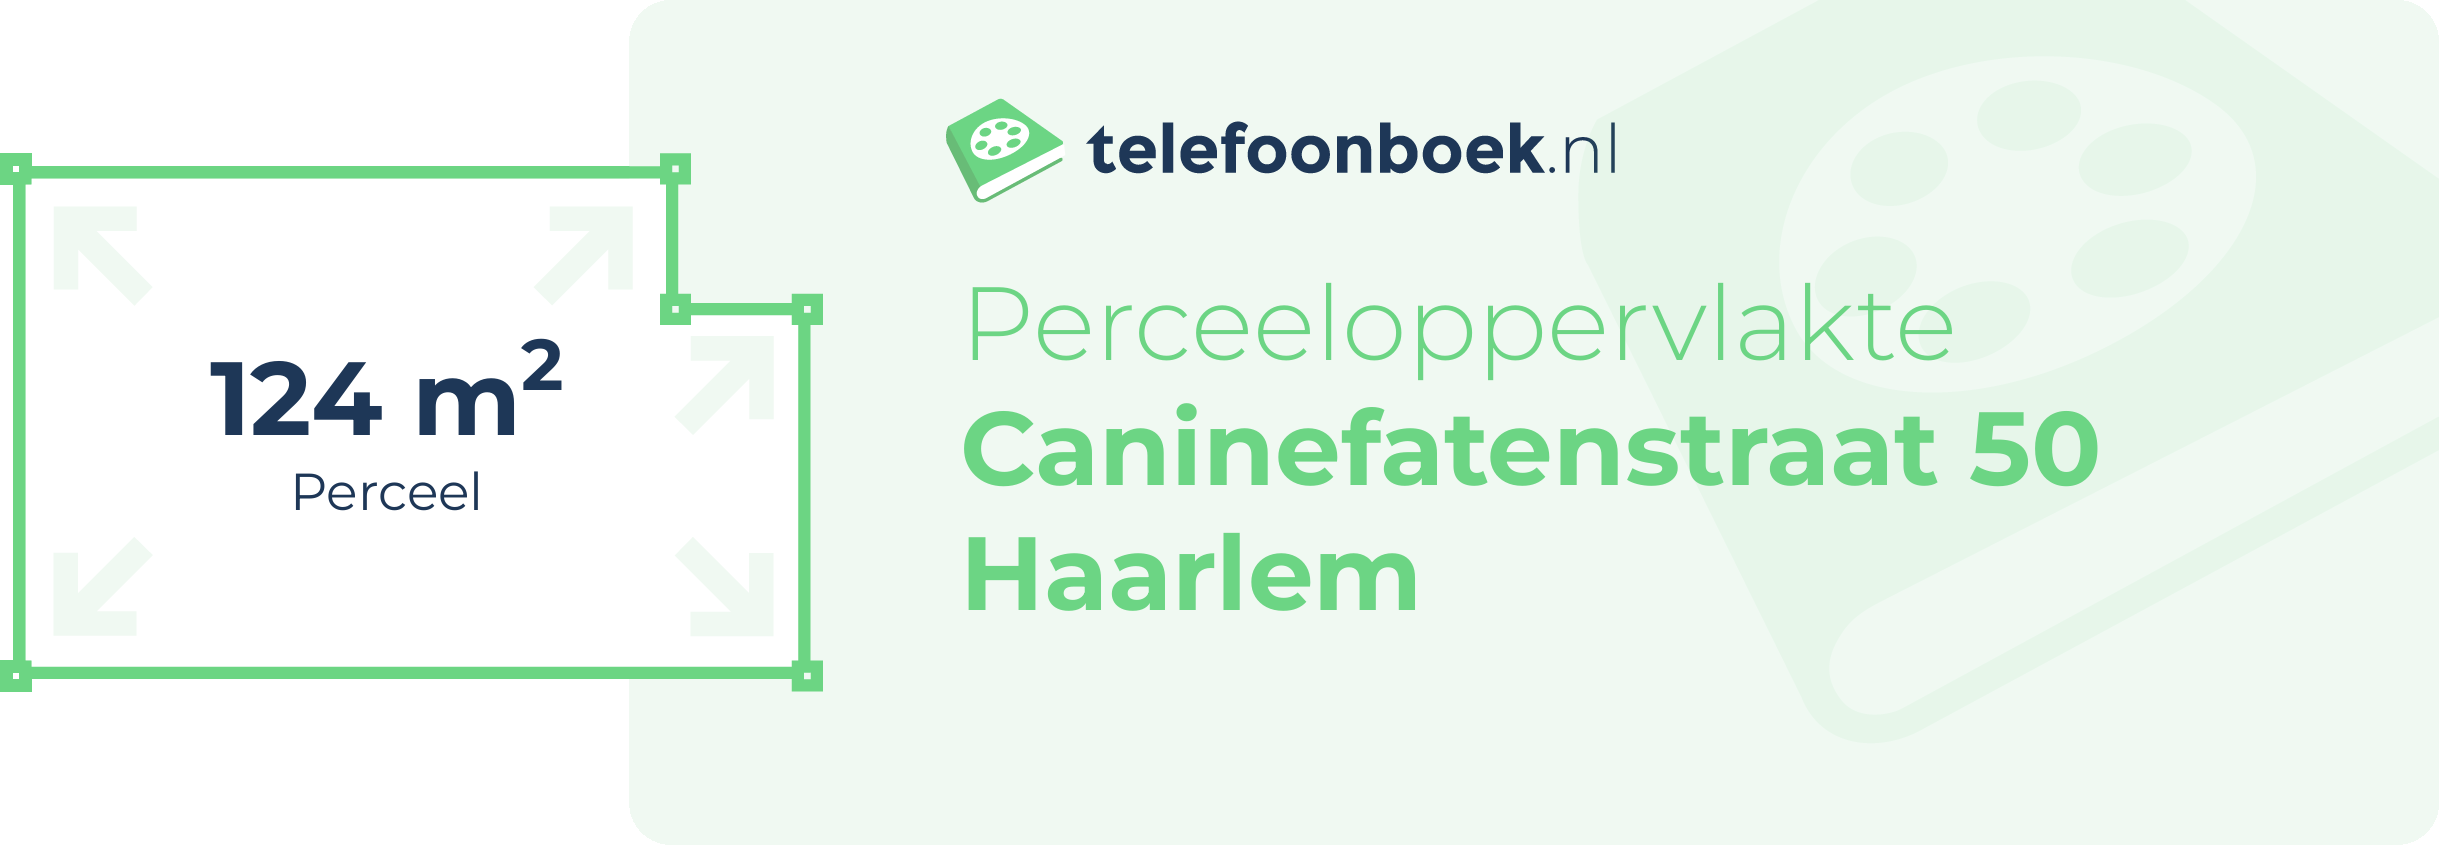 Perceeloppervlakte Caninefatenstraat 50 Haarlem